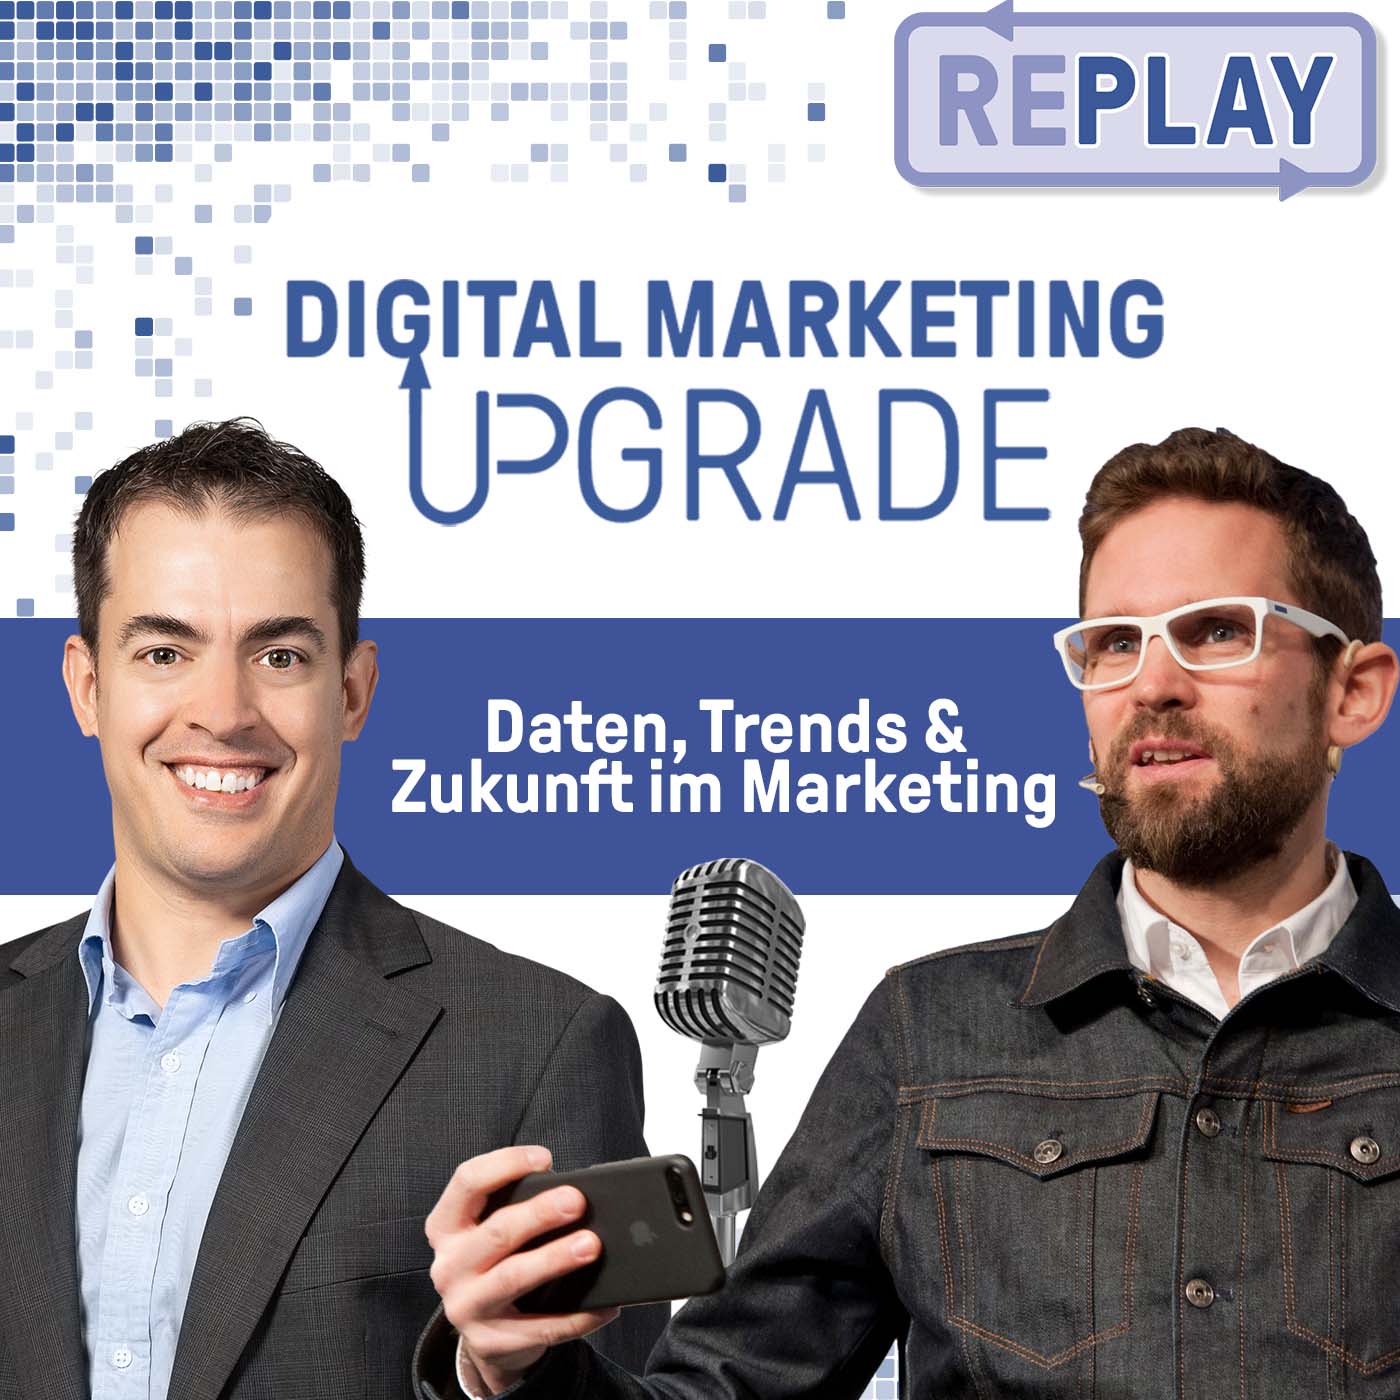 Daten, Trends & Zukunft im Marketing - Replay mit Curt Simon Harlinghausen